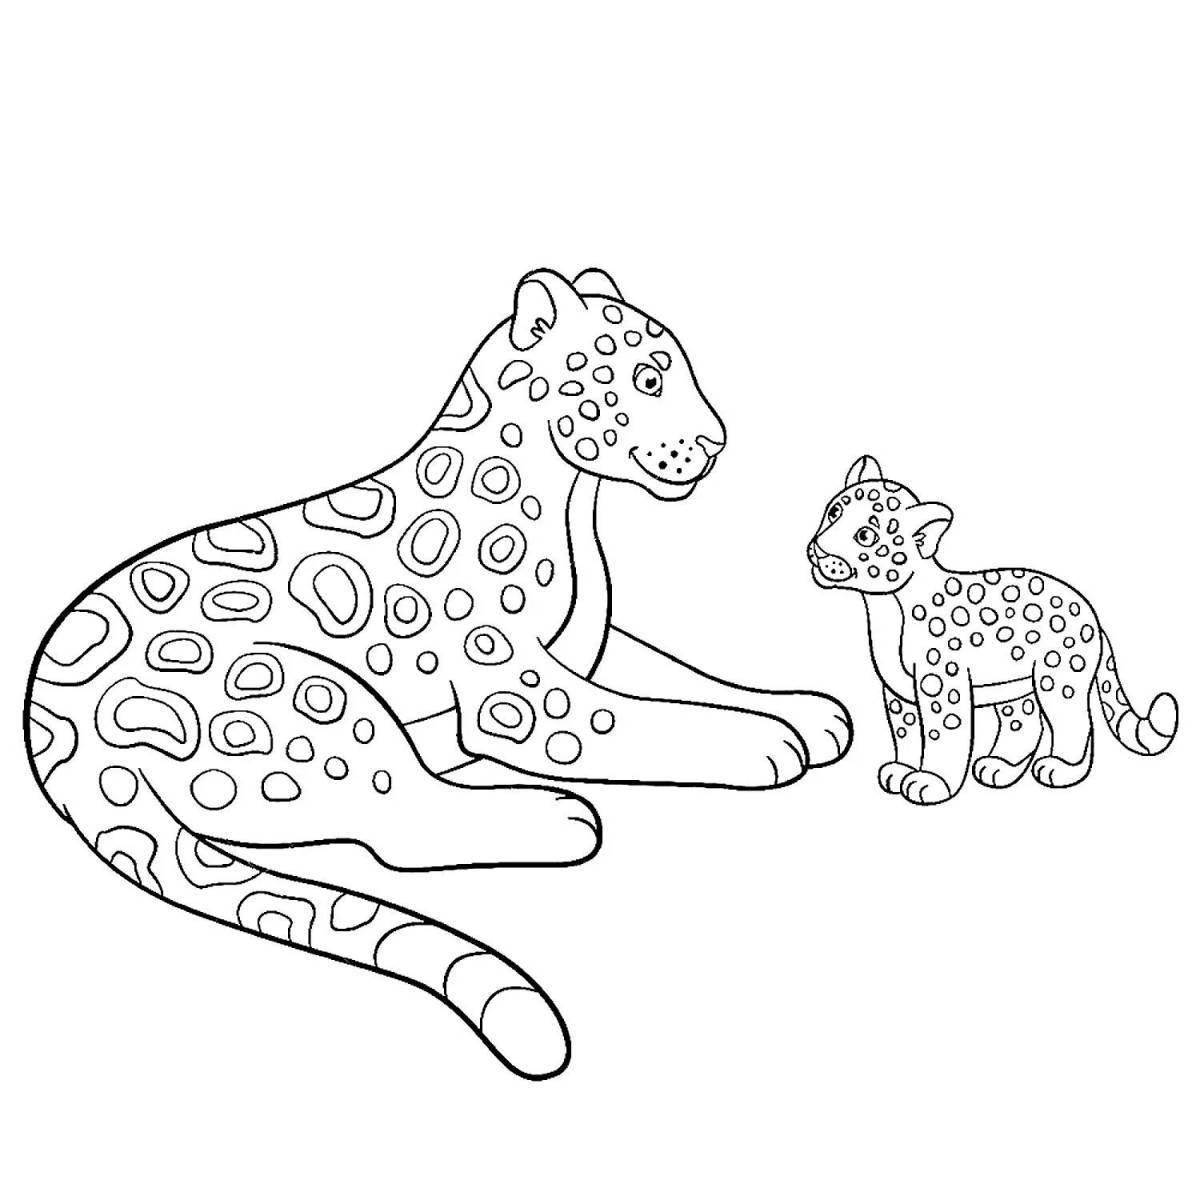 Exquisite leopard coloring page